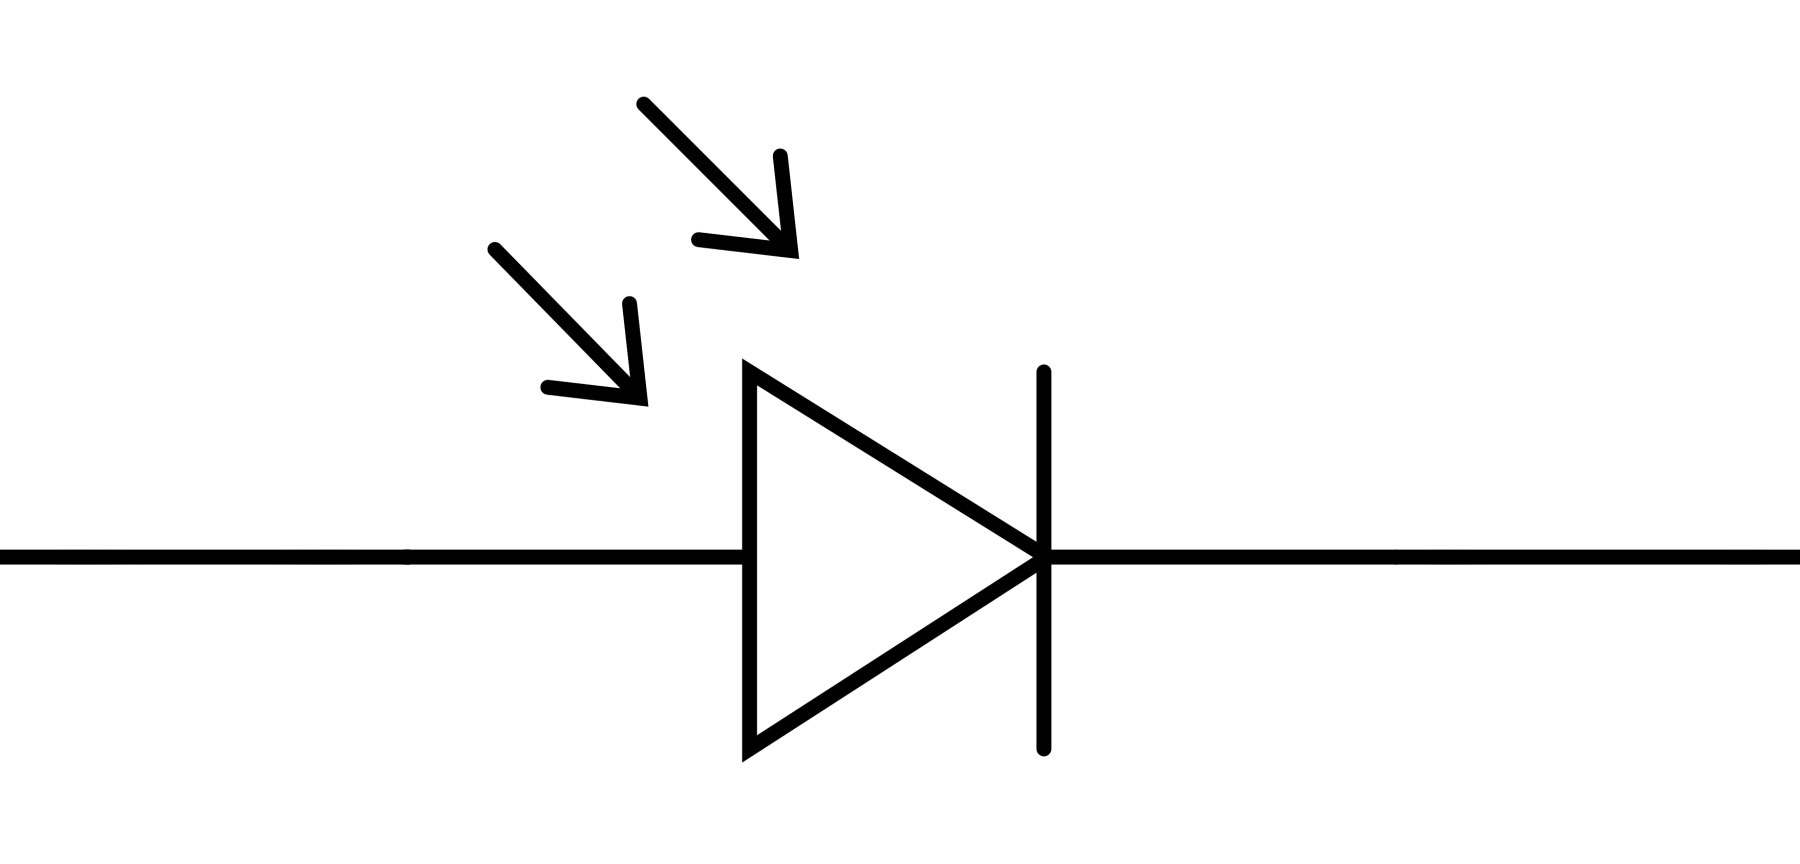 Ligh Emitting Diode (LED) - Electronic Symbol